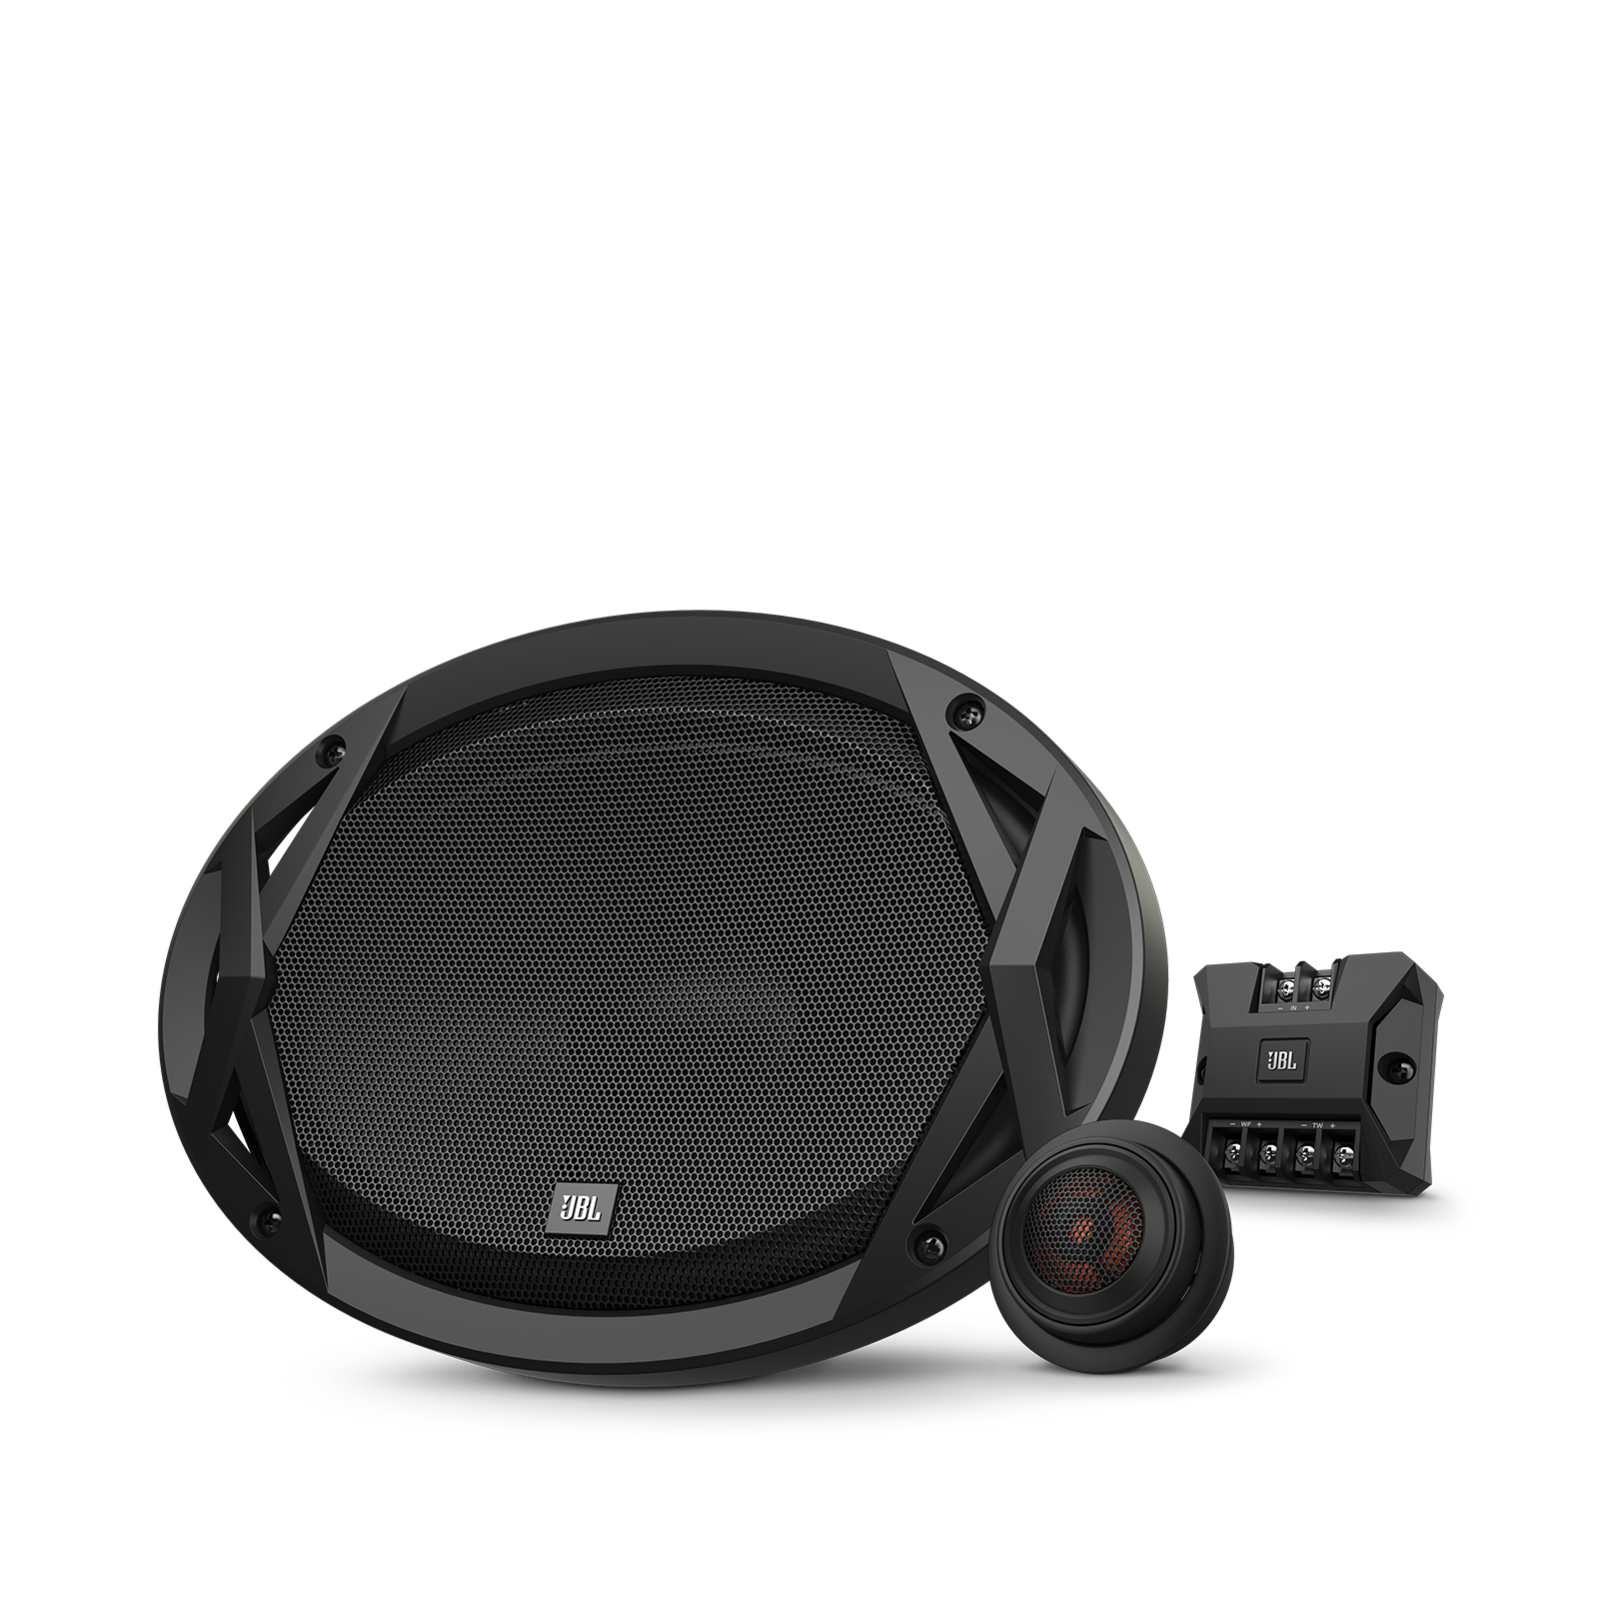 Club 9600c - Black - 6"x9" (152mm x 230mm) component speaker system - Hero